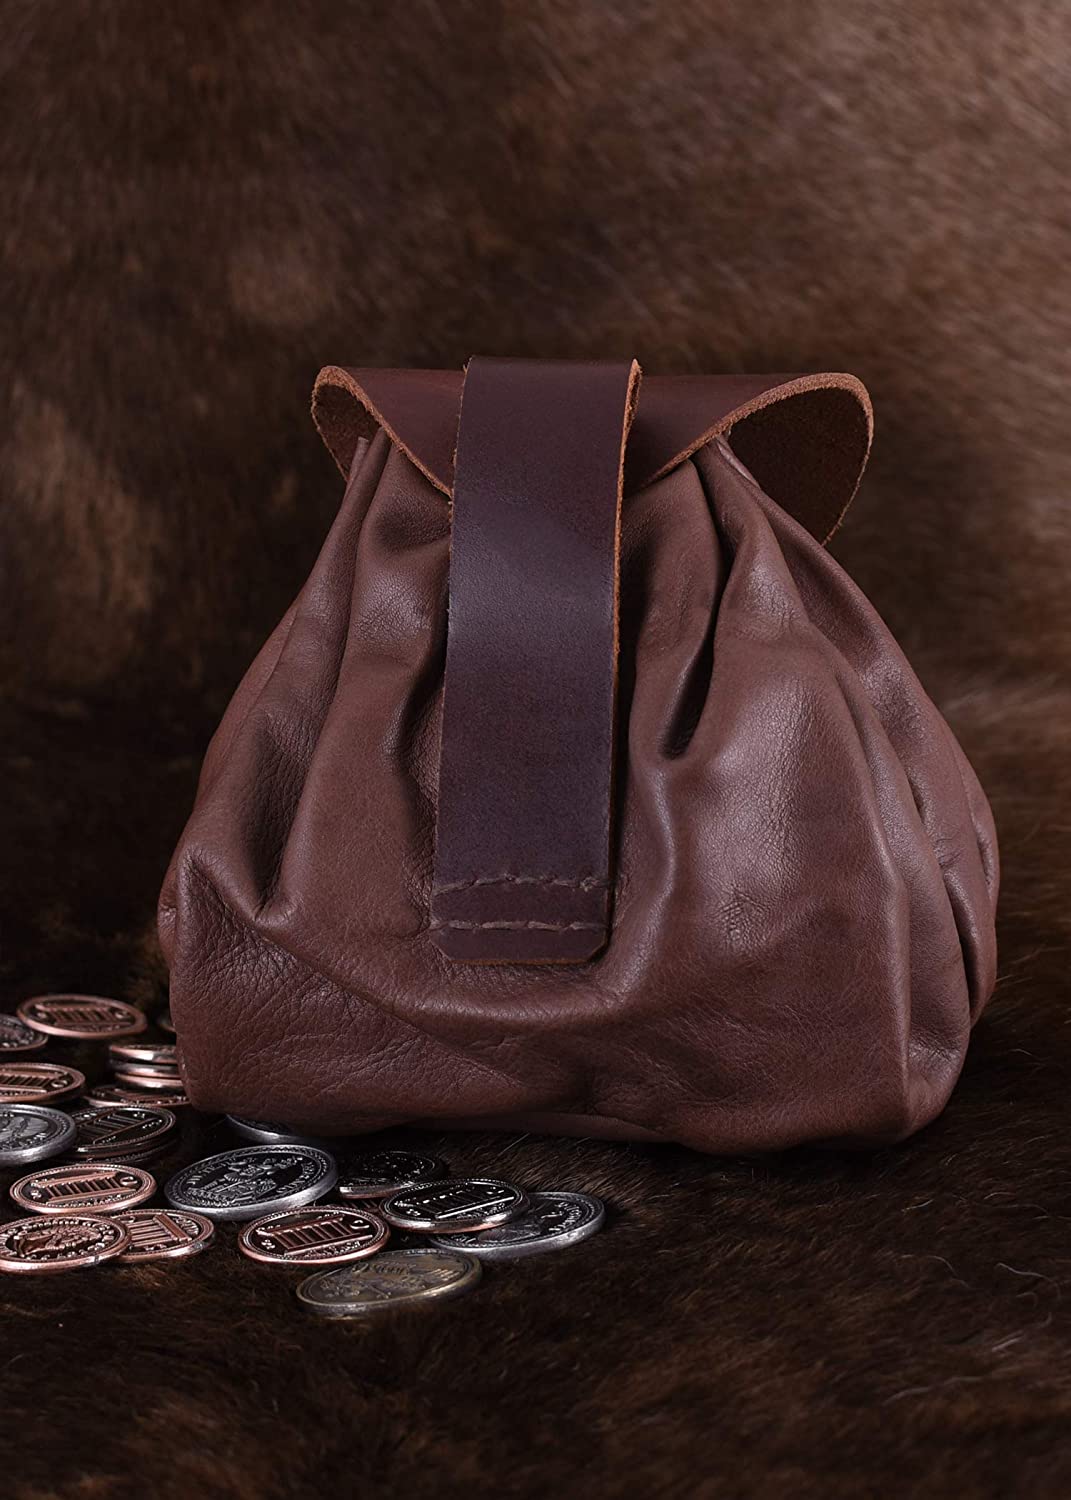 Unbekannt Wallet with Horn Button, Dark Brown Leather Bag, Large ...